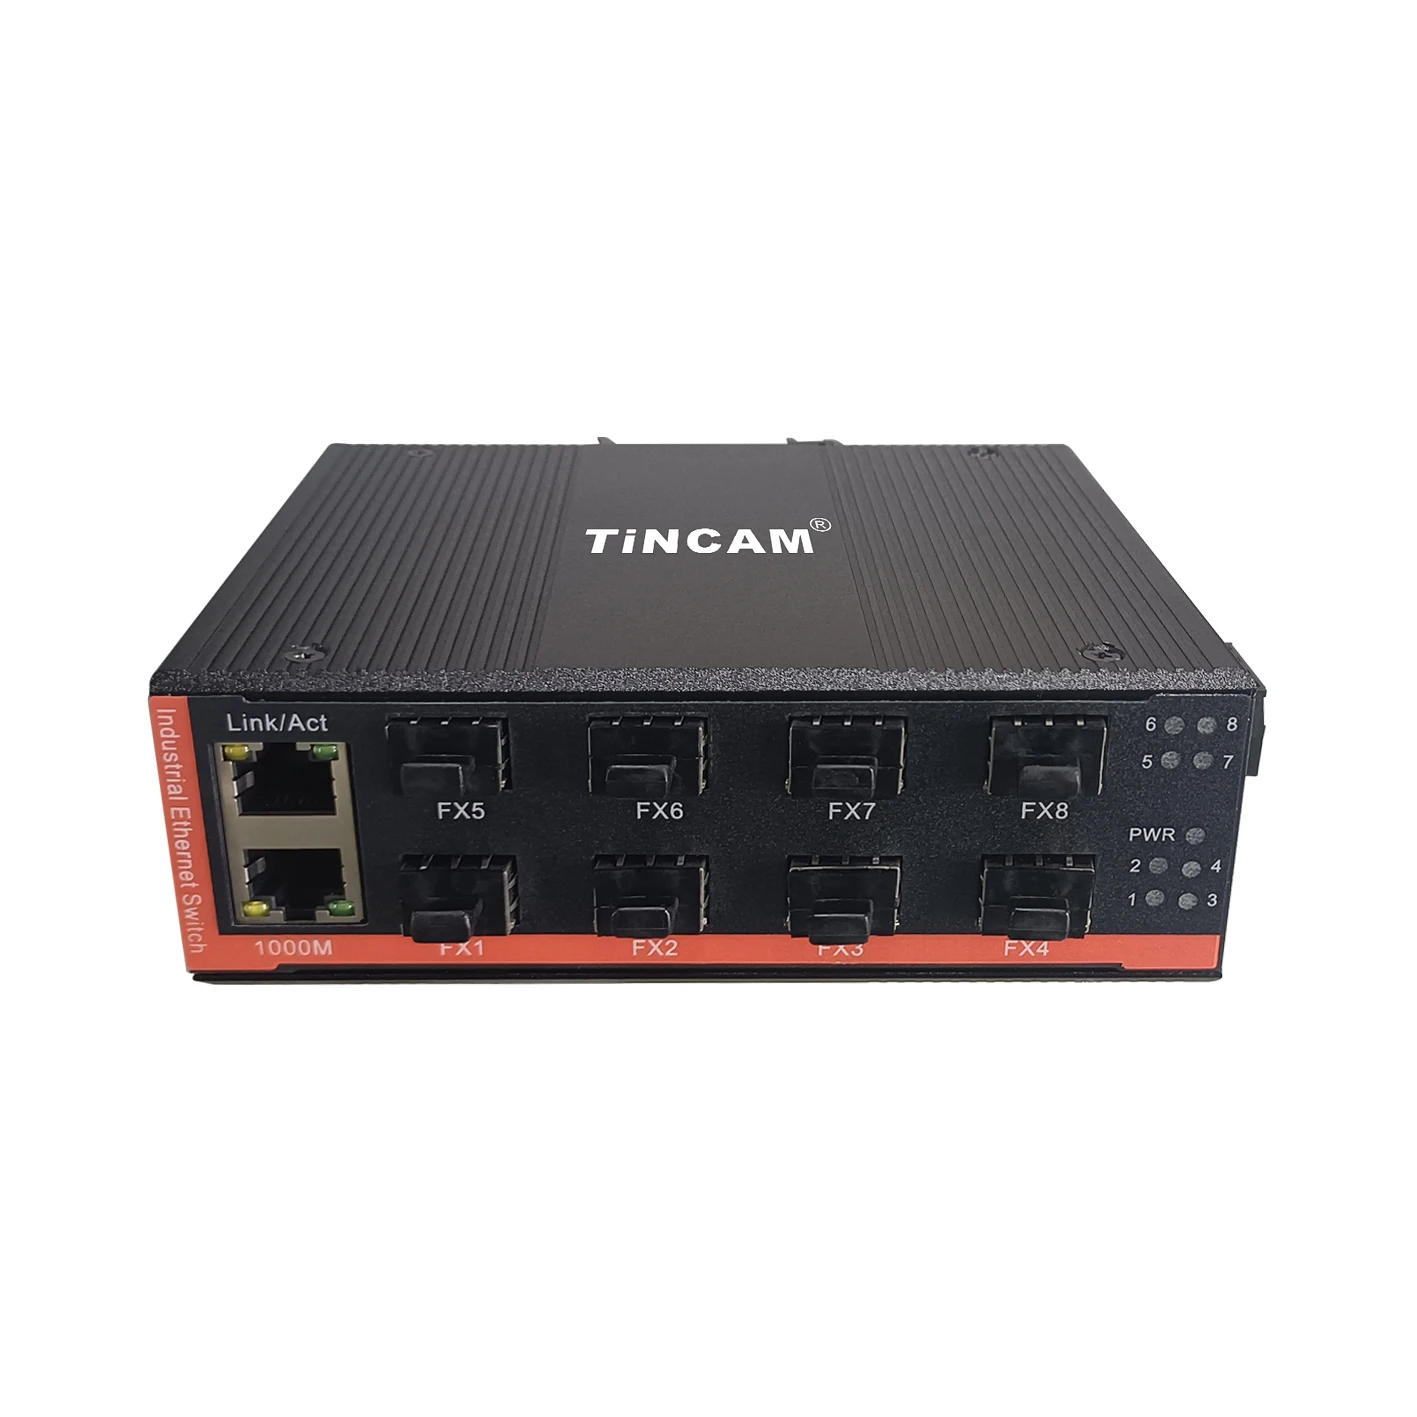 TiNCAM Gigabit 10Port Access 8*SFP+2*RJ45 Industrial Network Switch Aggregation Industrial Media Converter whitetown mdb access to xls excel converter